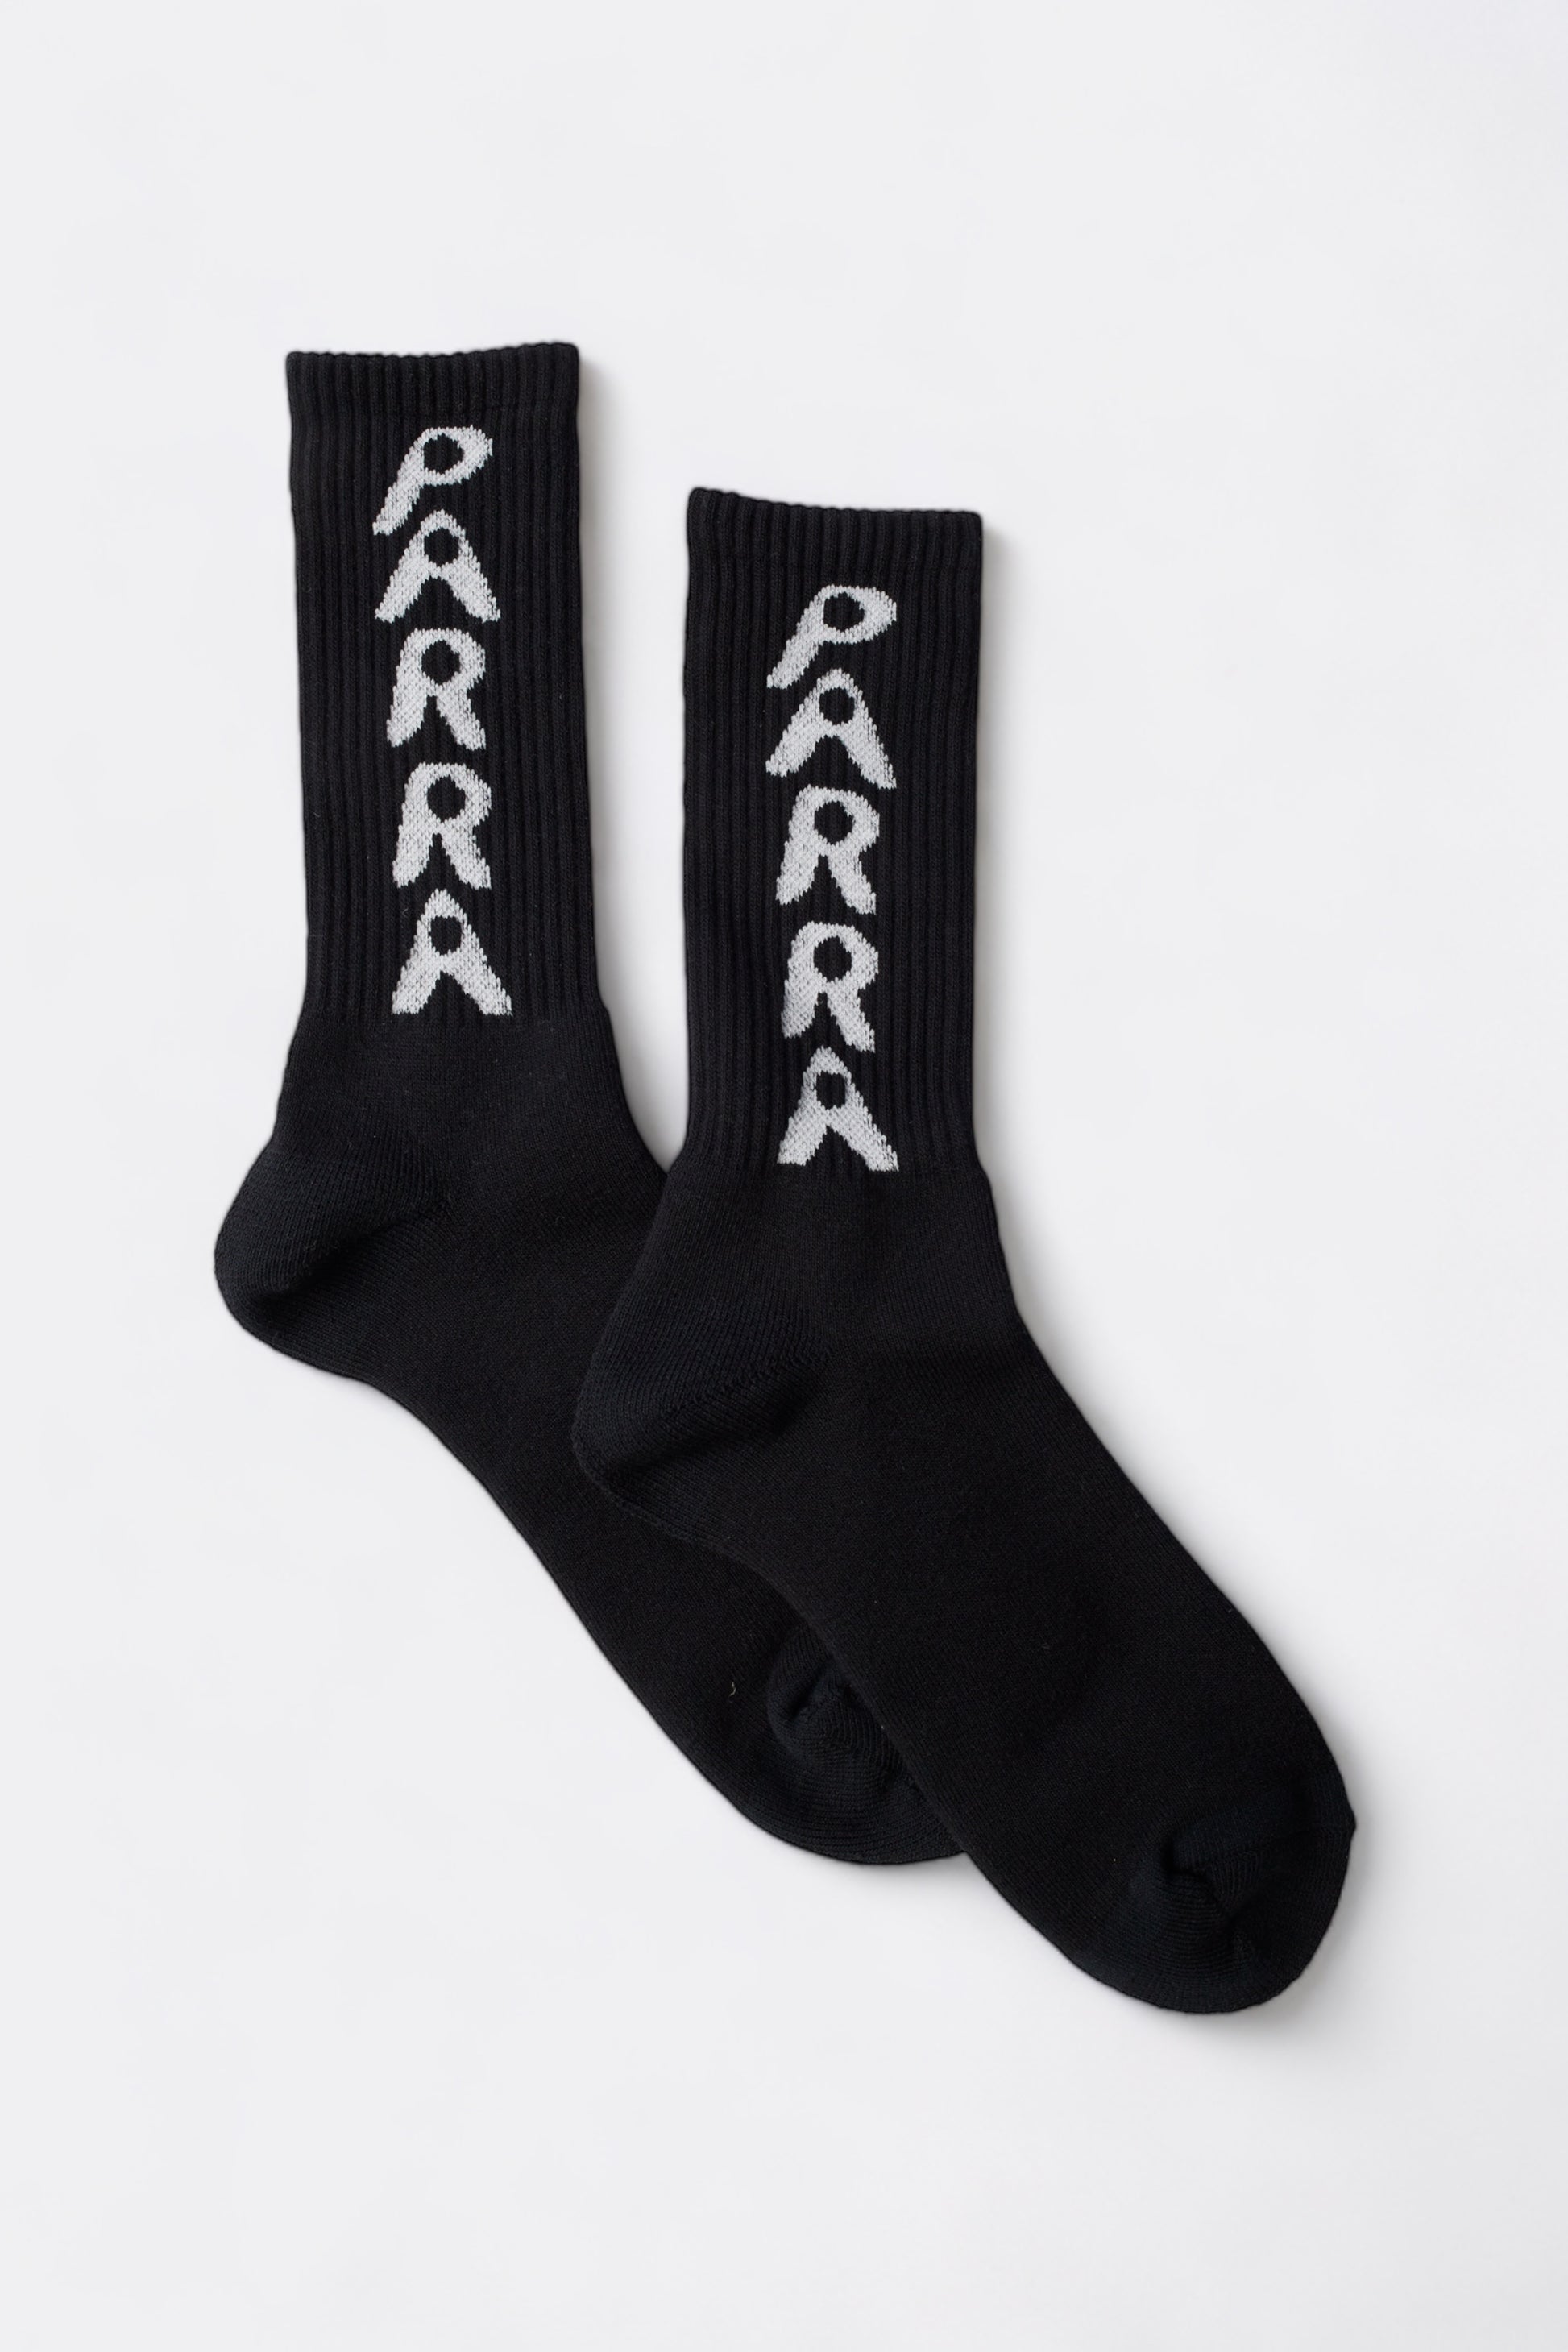 Parra - Hole Logo Crew Socks (Black)